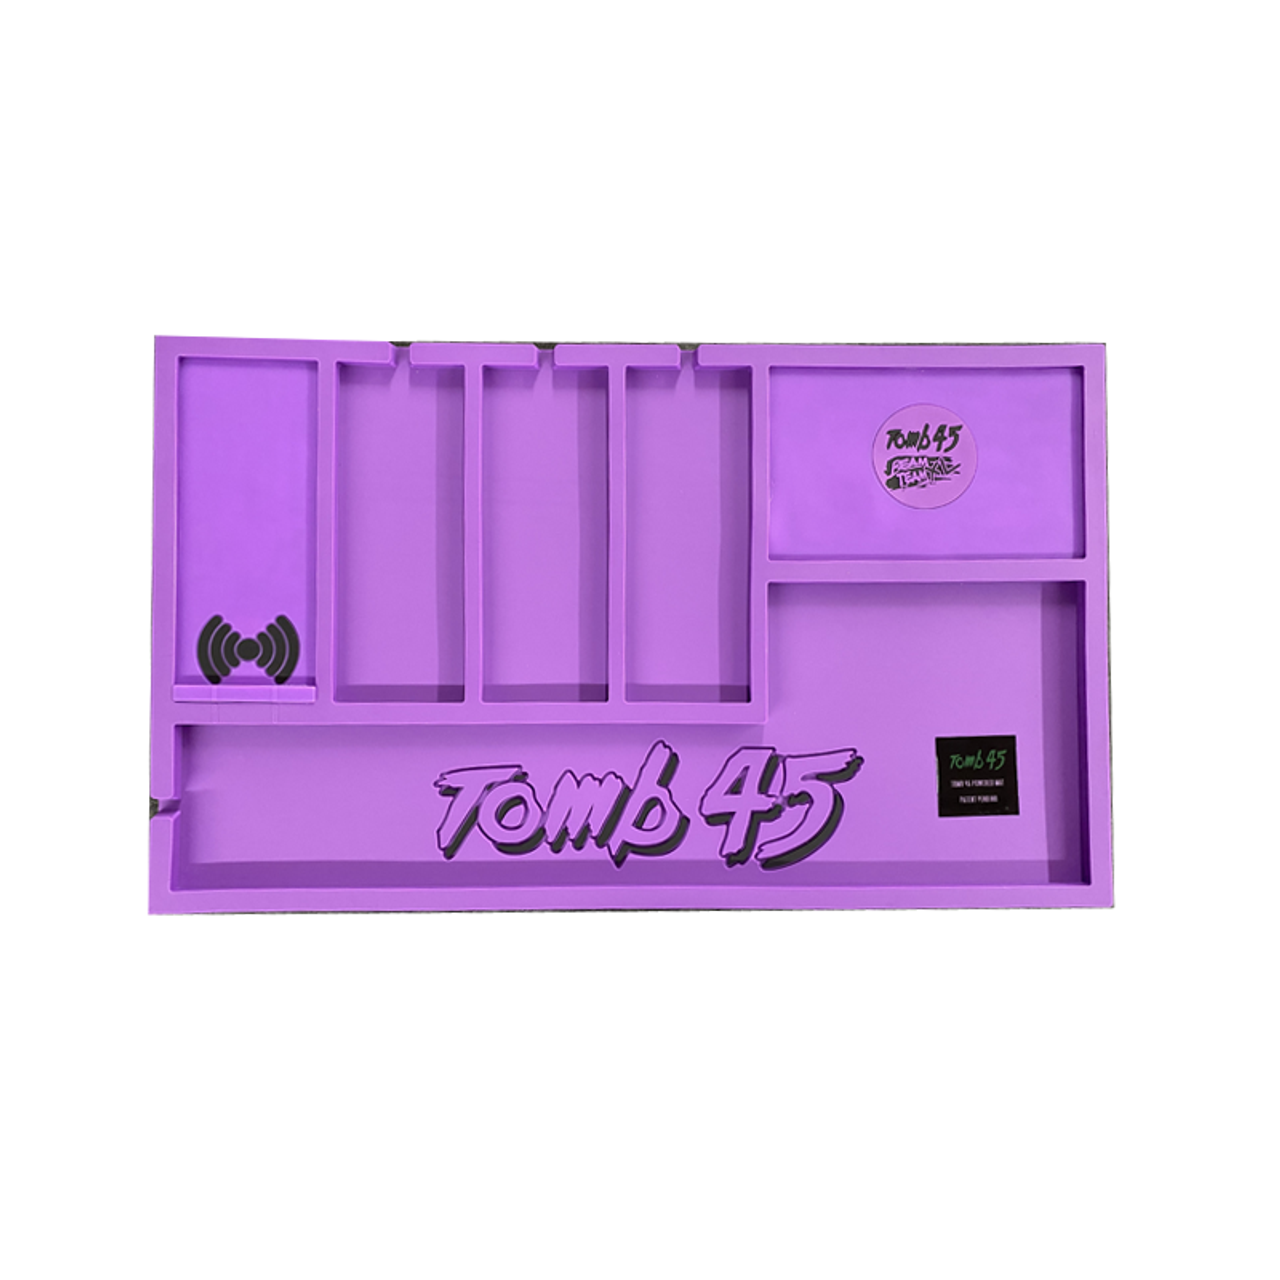 Tomb 45 Colored Powered Wireless Charging Organizing Station Mat - Purple